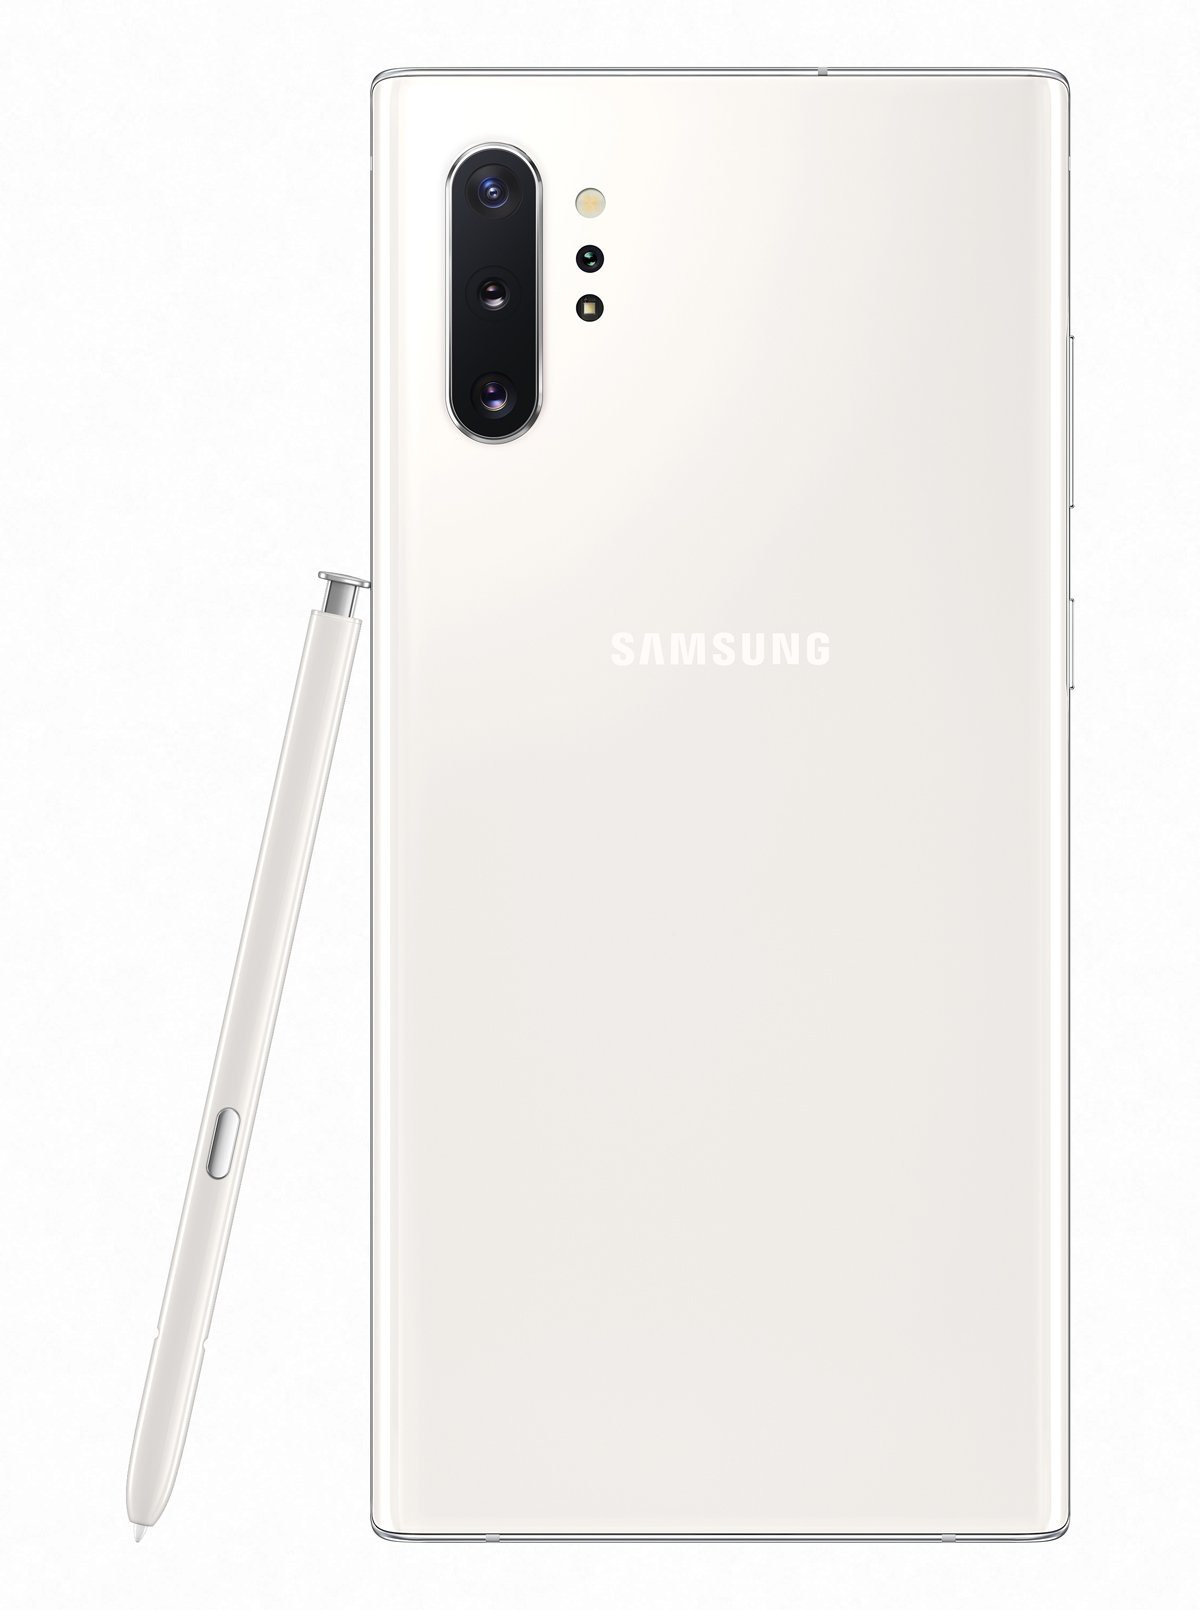 Samsung Galaxy Note 10+ ревю